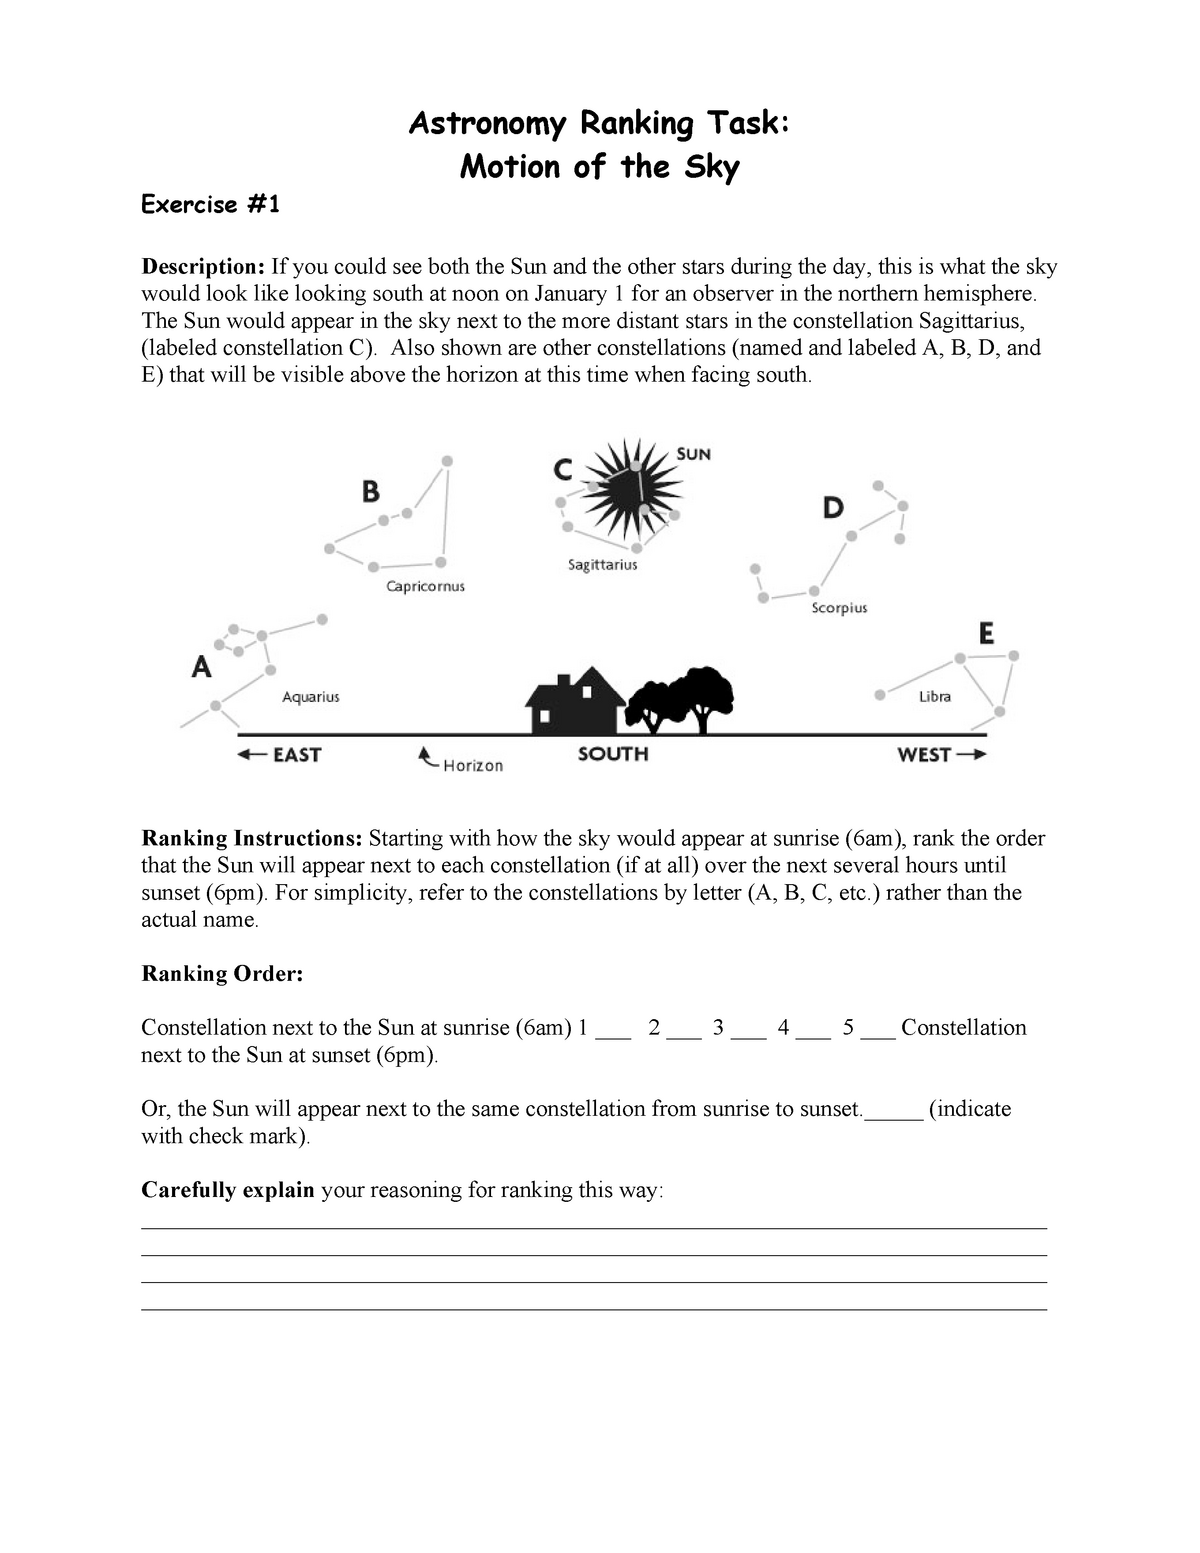 mastering astronomy homework 2 answers